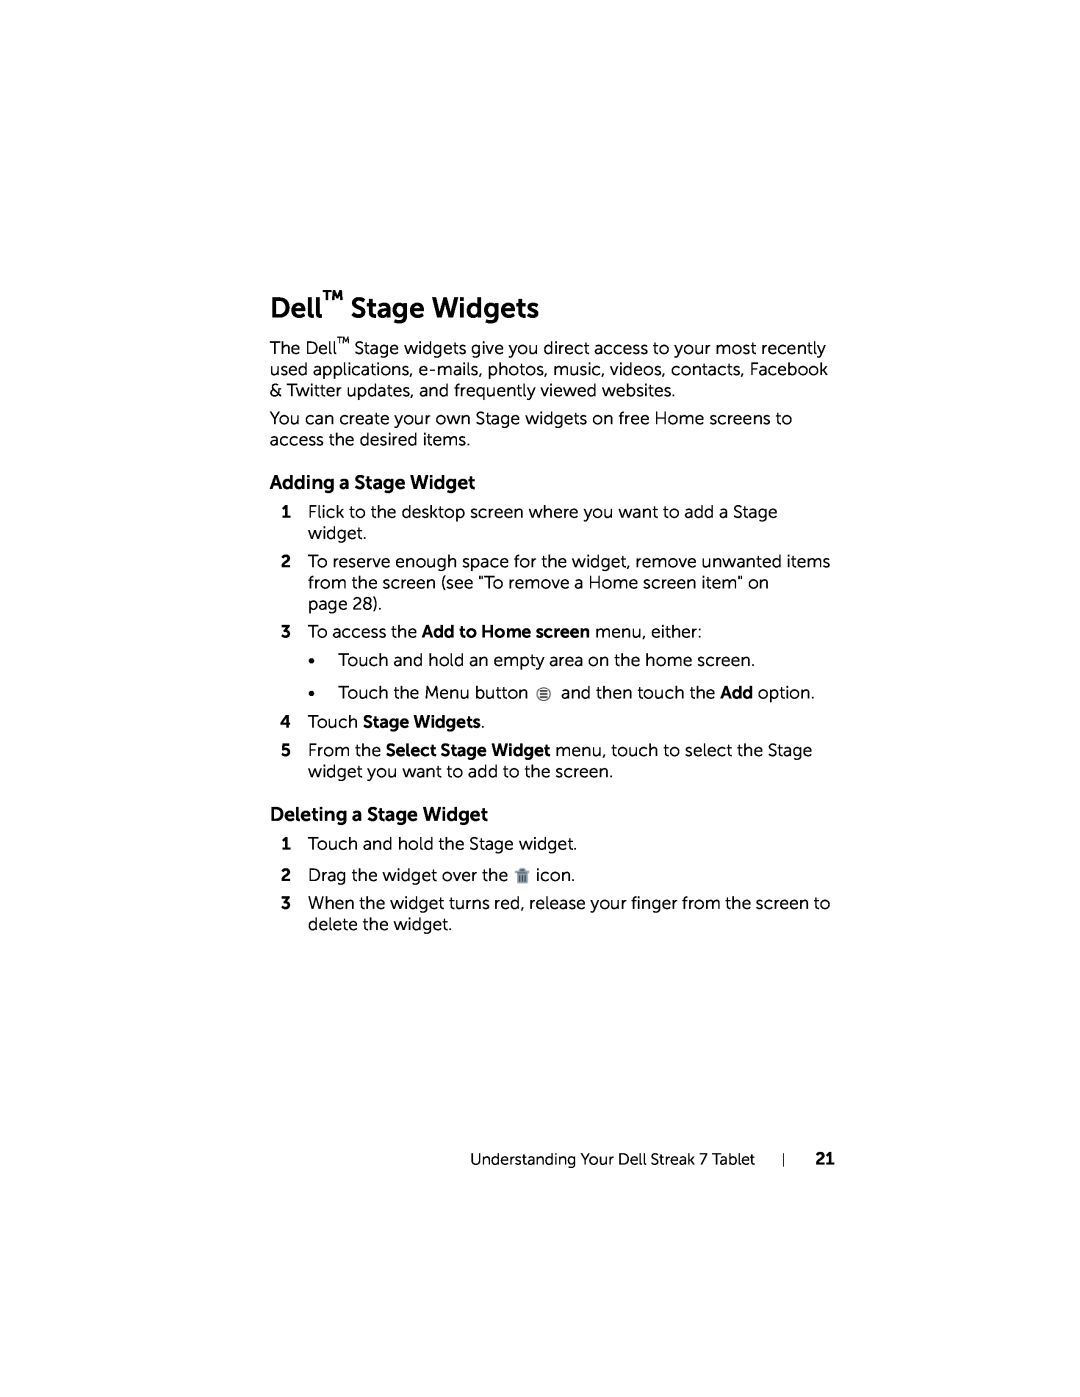 Dell 7 user manual Dell Stage Widgets, Adding a Stage Widget, Deleting a Stage Widget 